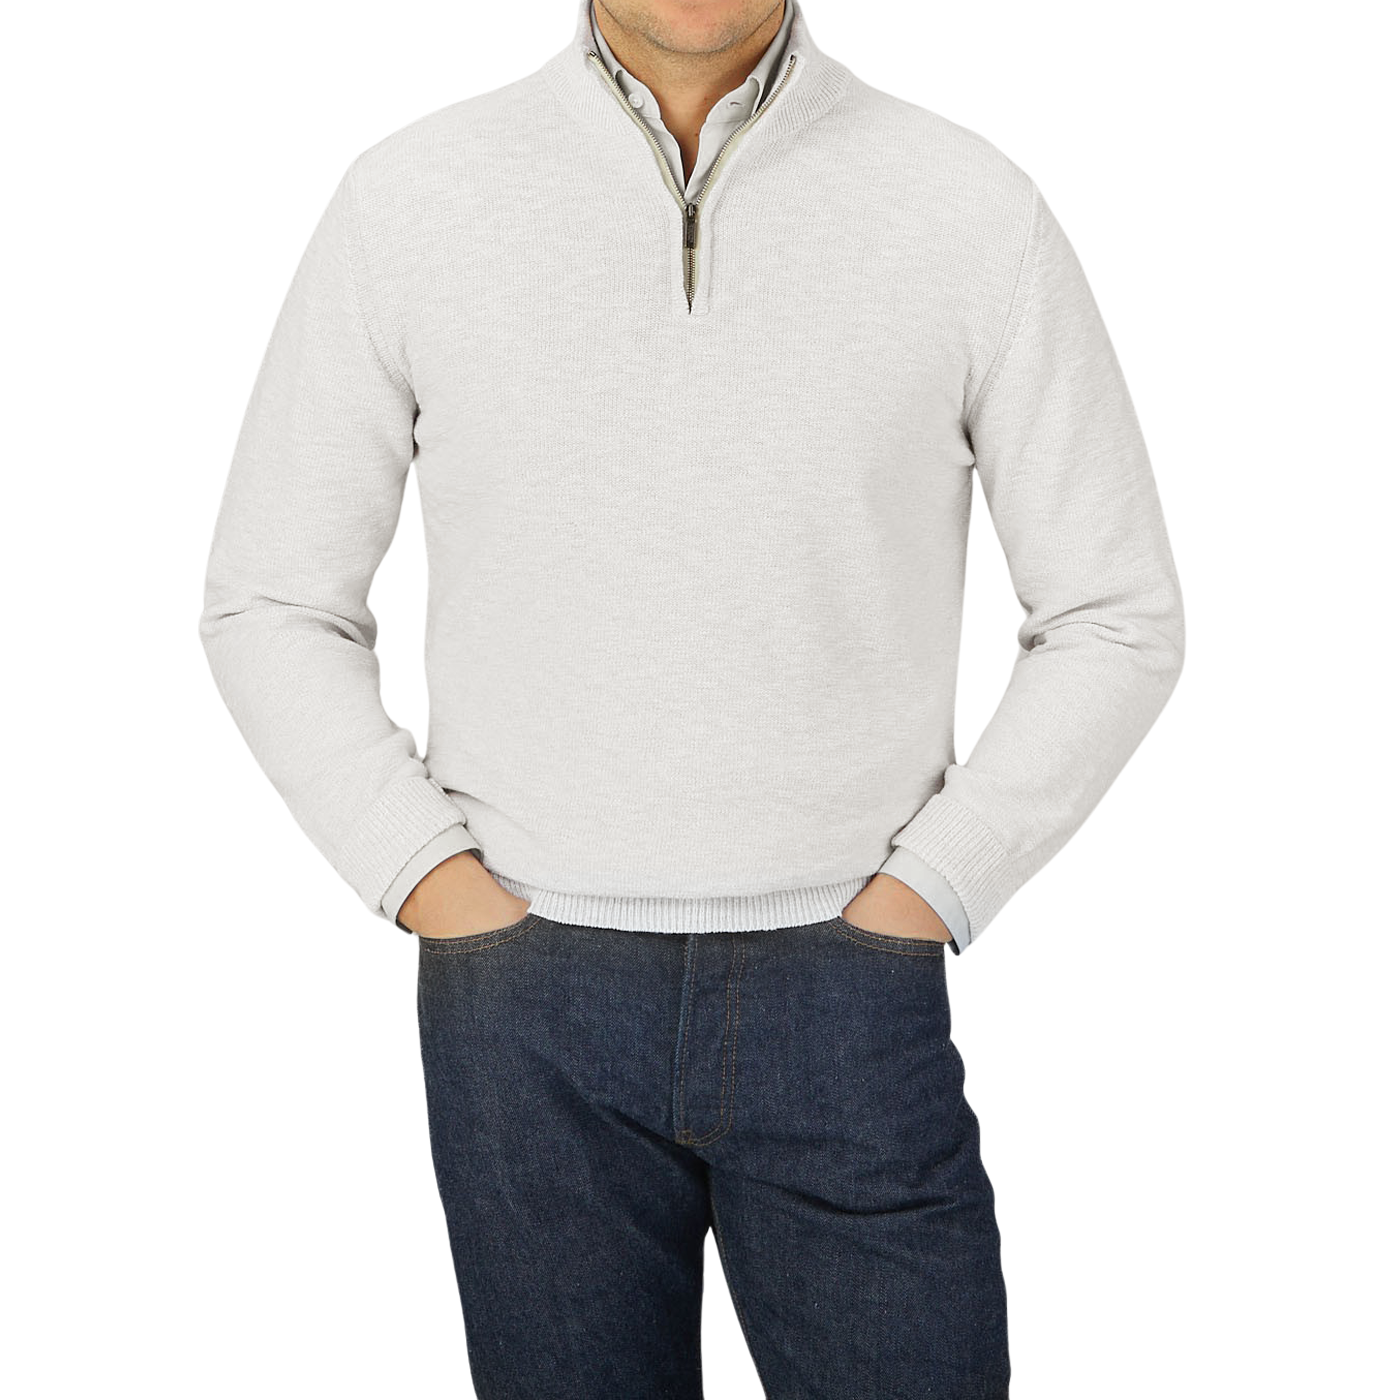 A man wearing a Maurizio Baldassari Cream White Cotton Mouline 1/4 Zip Sweater and jeans.